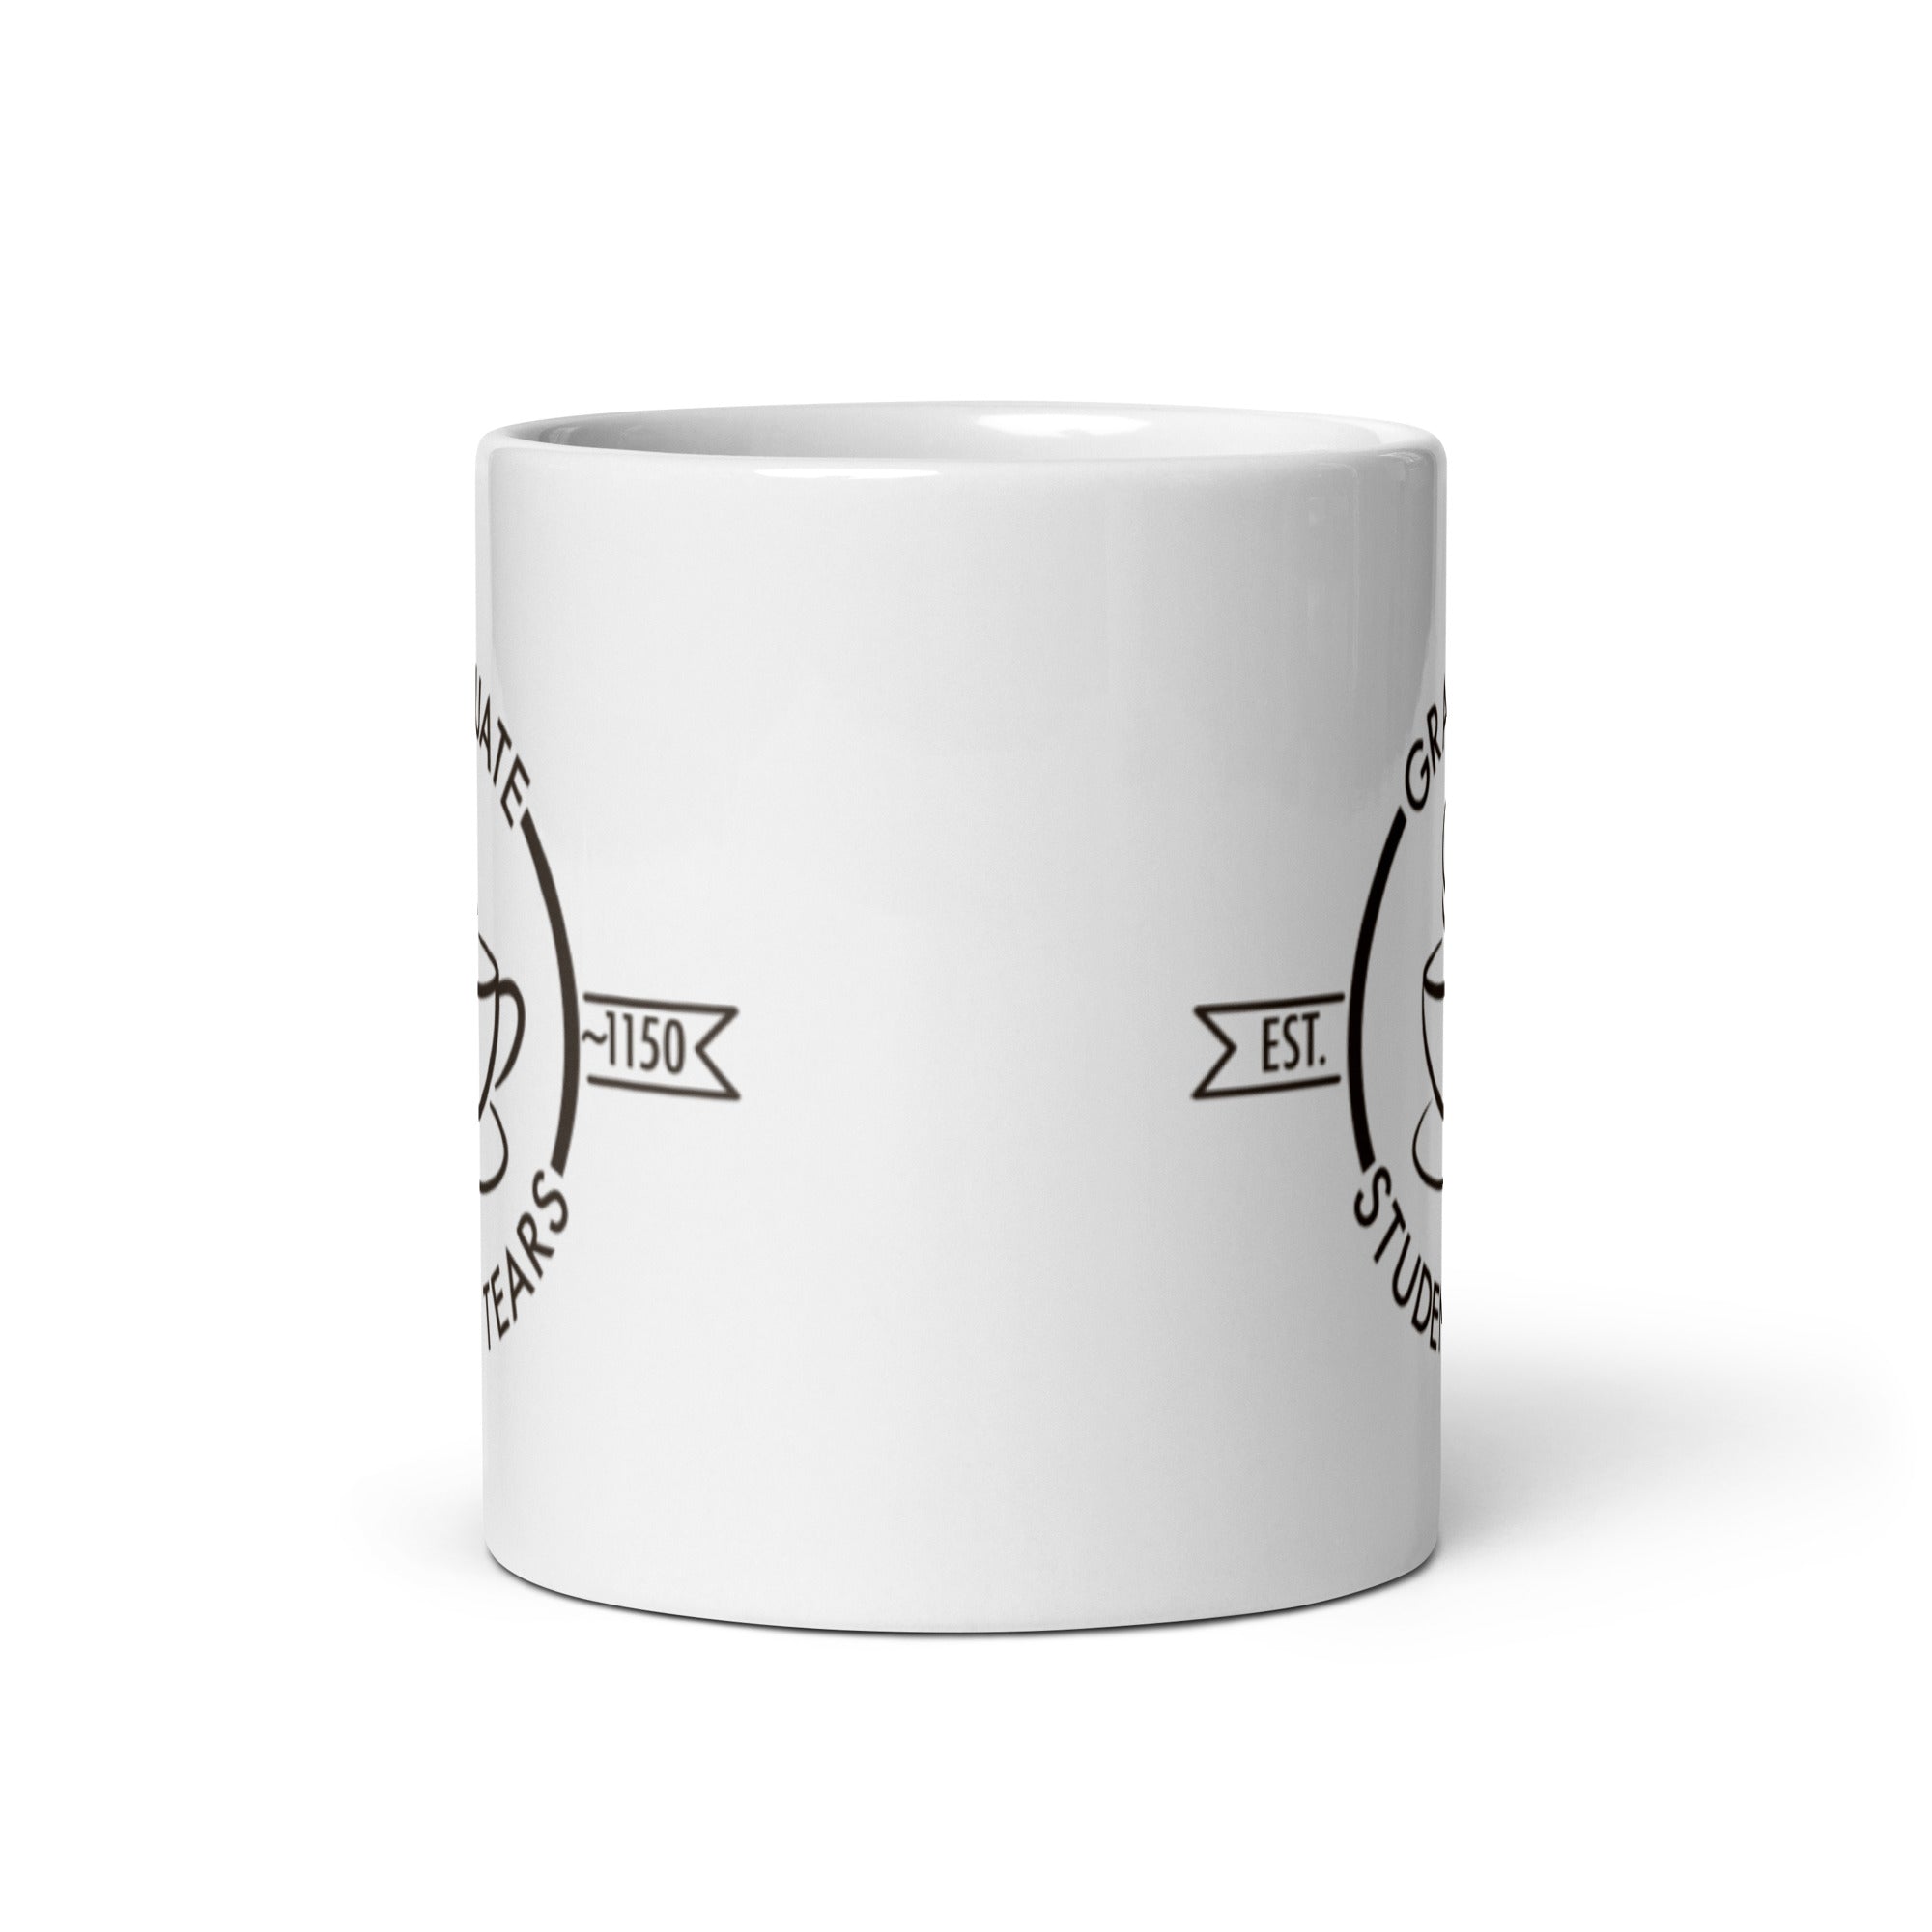 Appealing White Mug For Aesthetics And Usage 